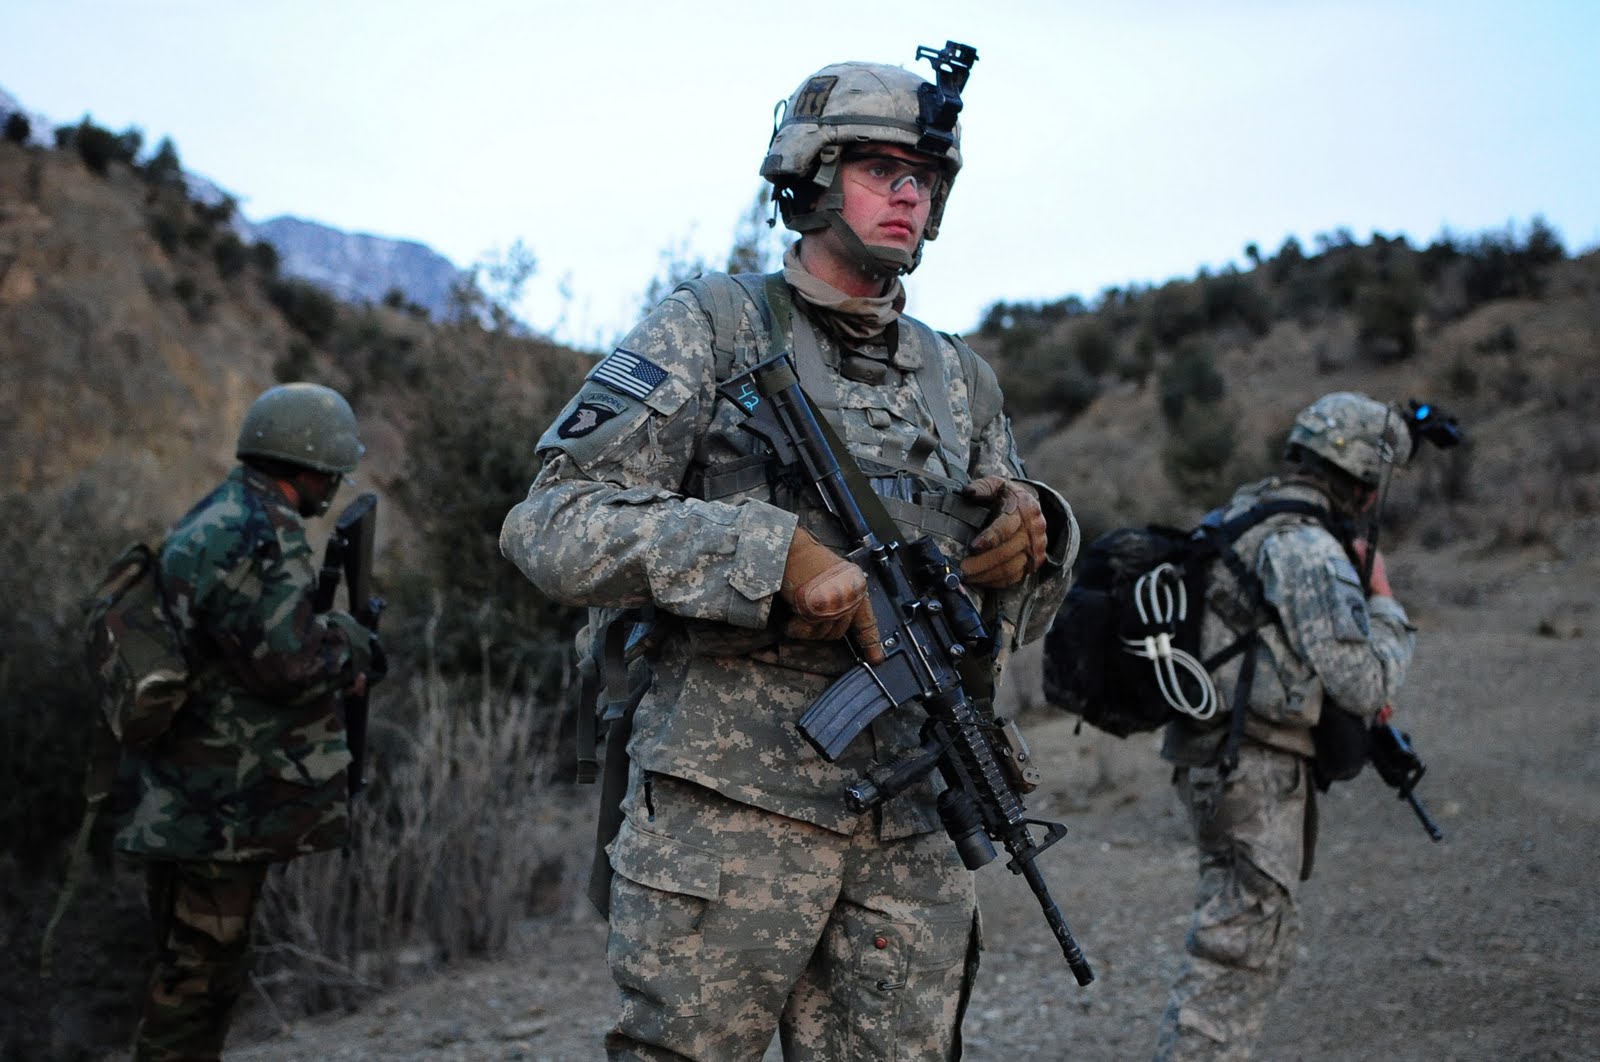 U.S. Army Combat Patch Policy